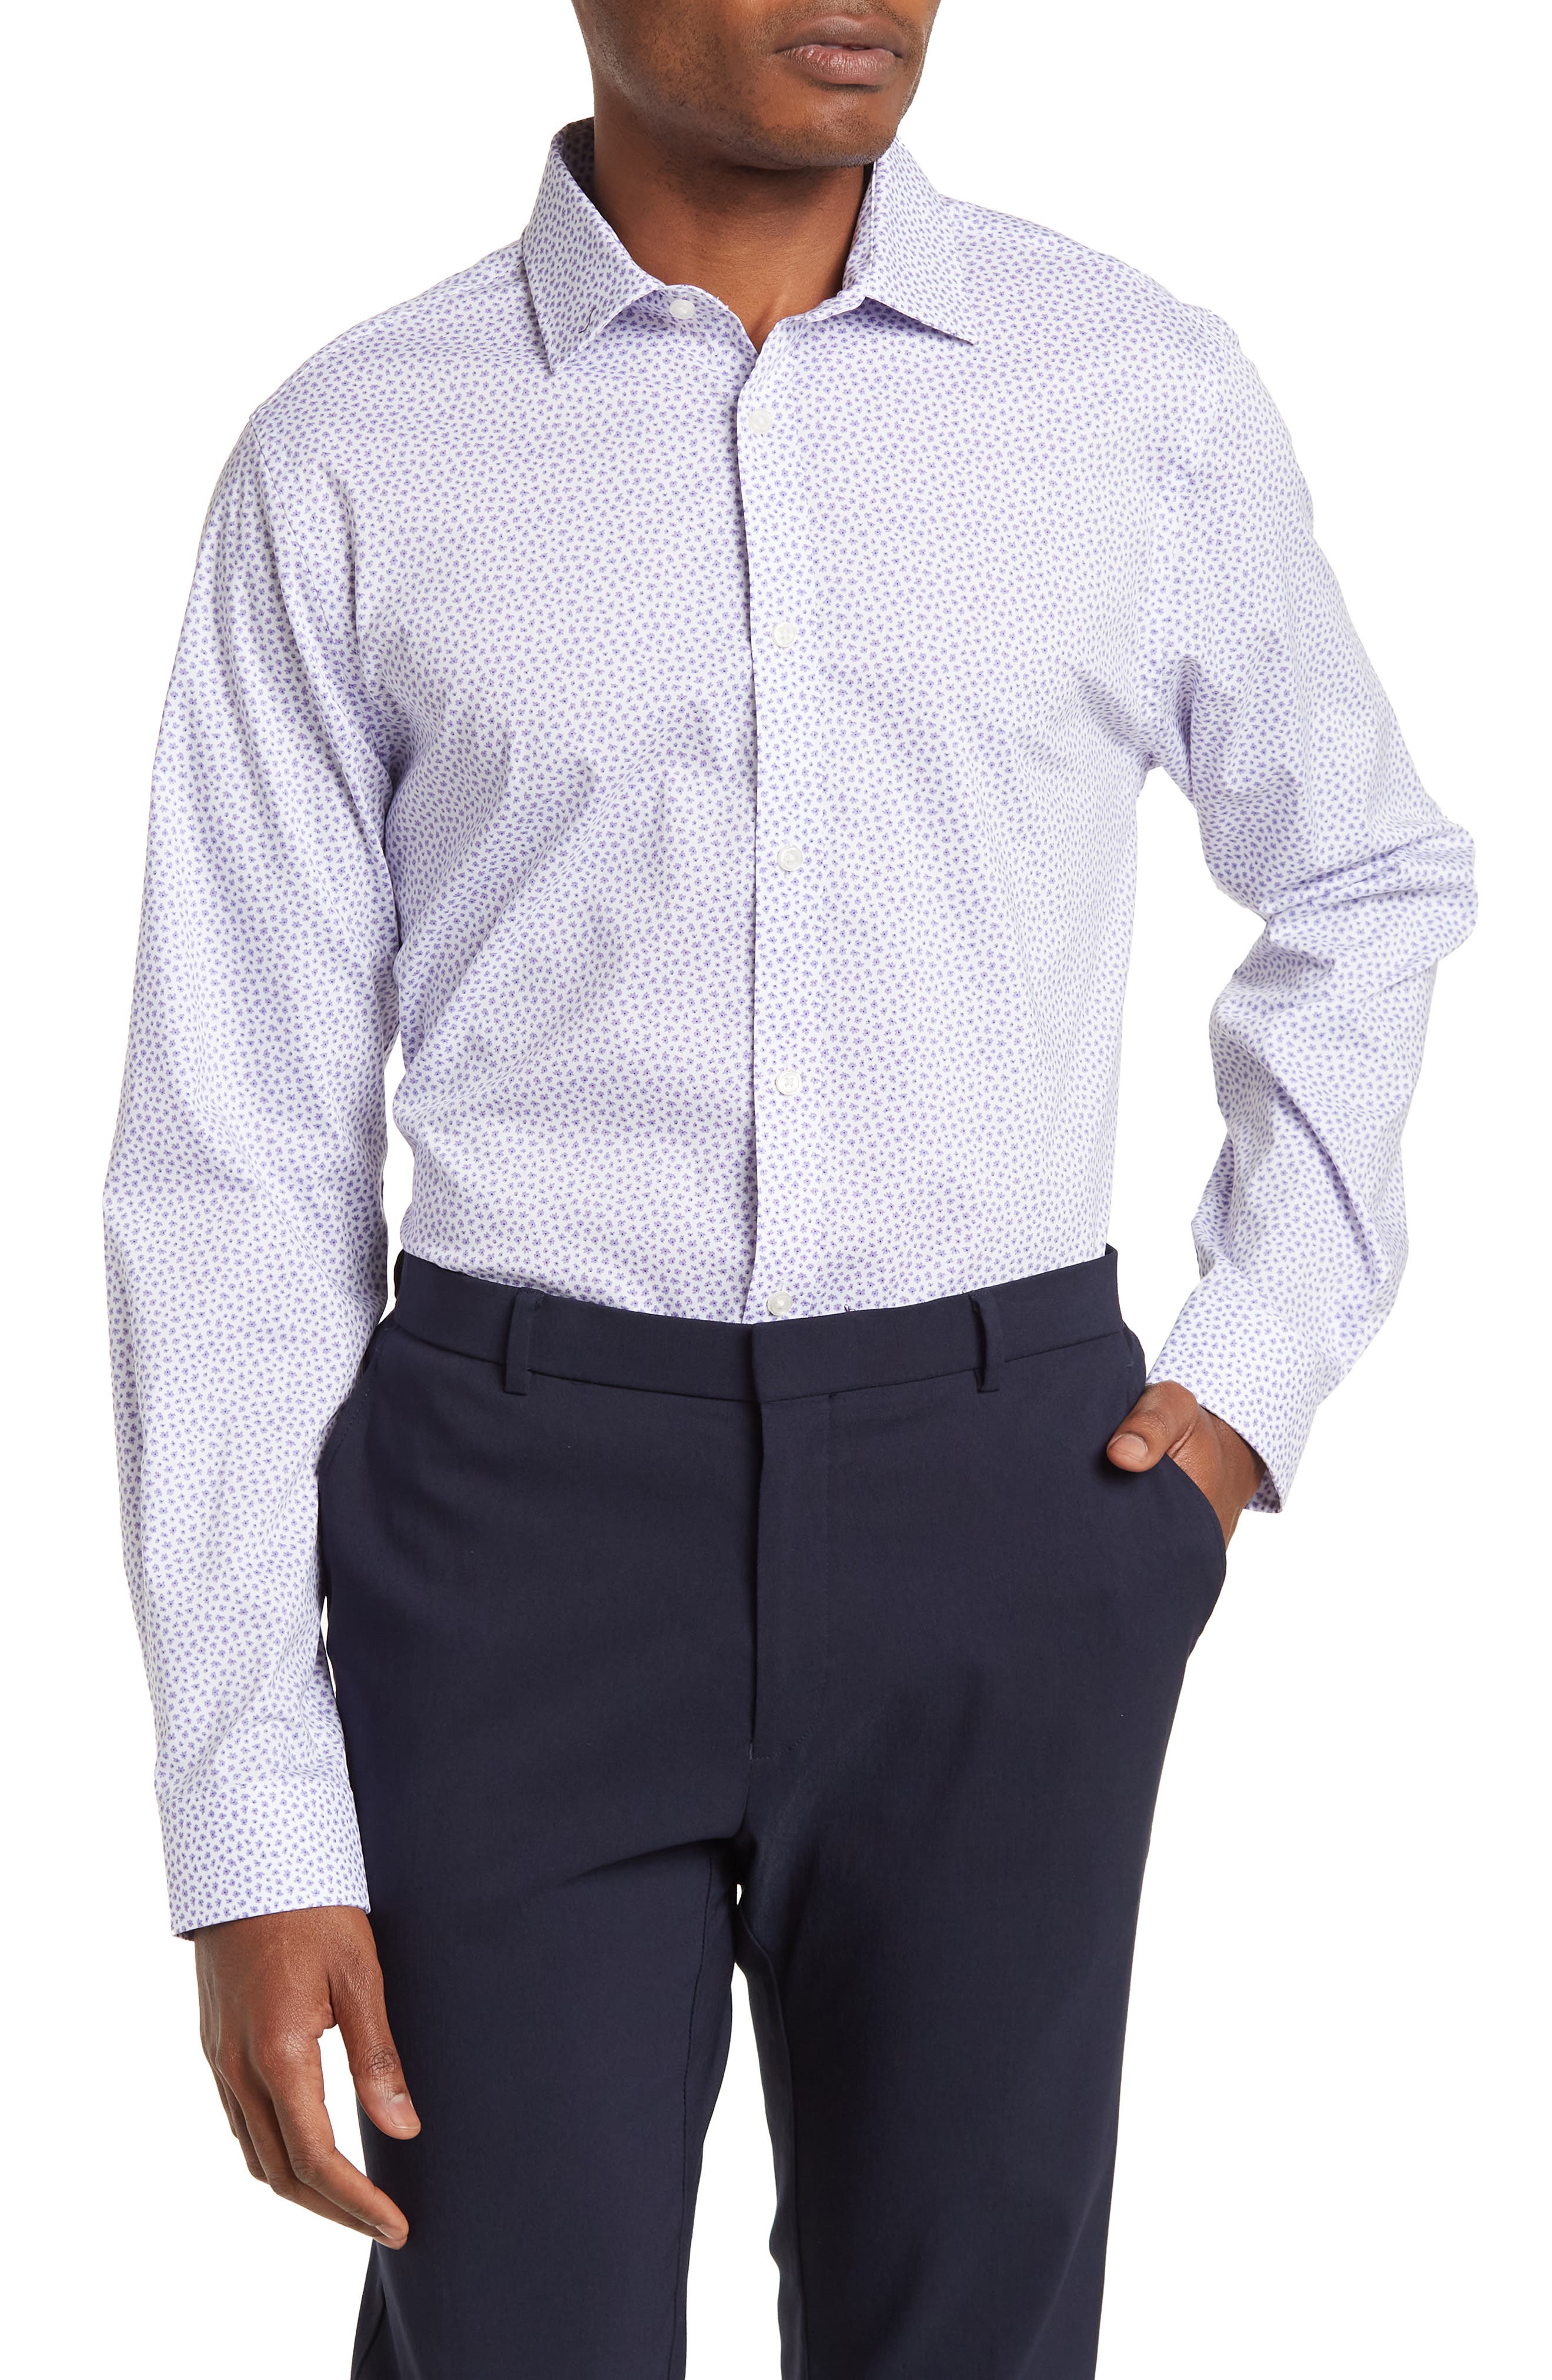 Tommy Hilfiger Regular Fit Stretch Long Sleeve Dress Shirt Blue White Any Size 